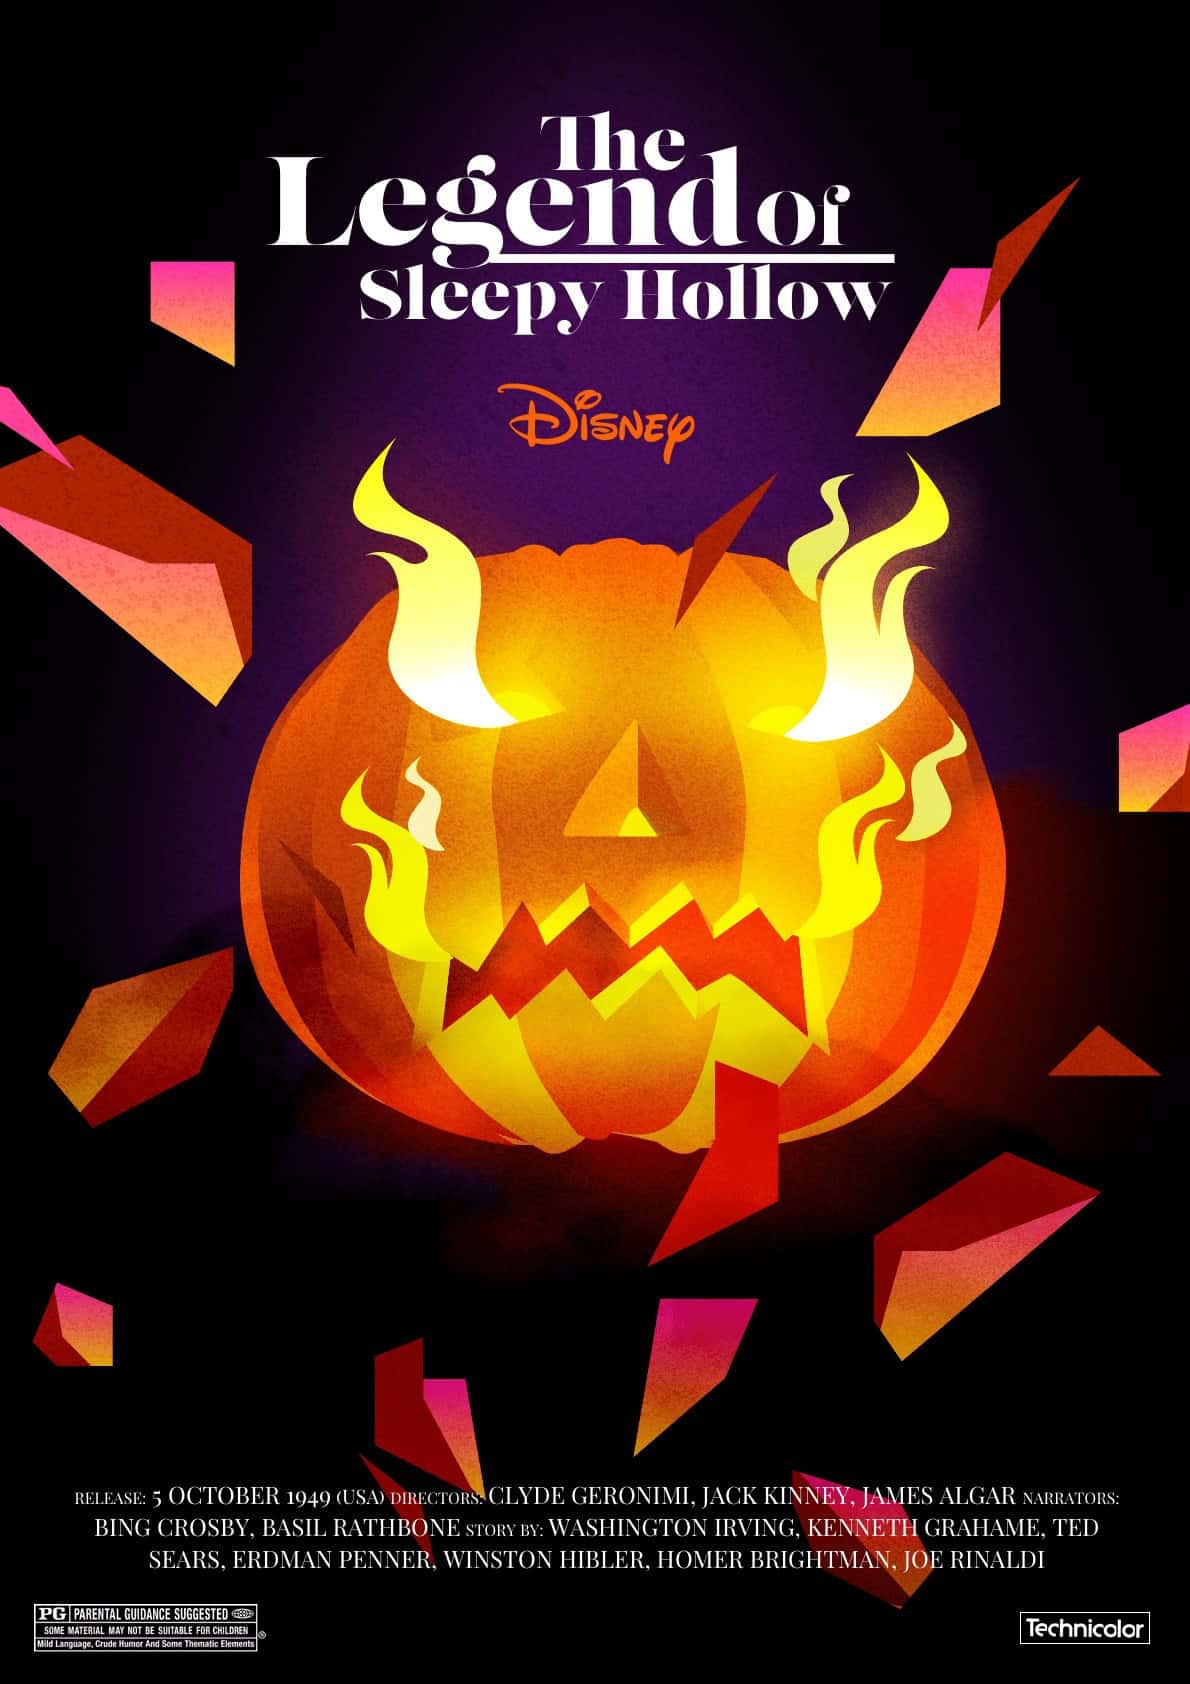 Disney’s The Legend of Sleepy Hollow Illustrated Key Art by Chris Richards